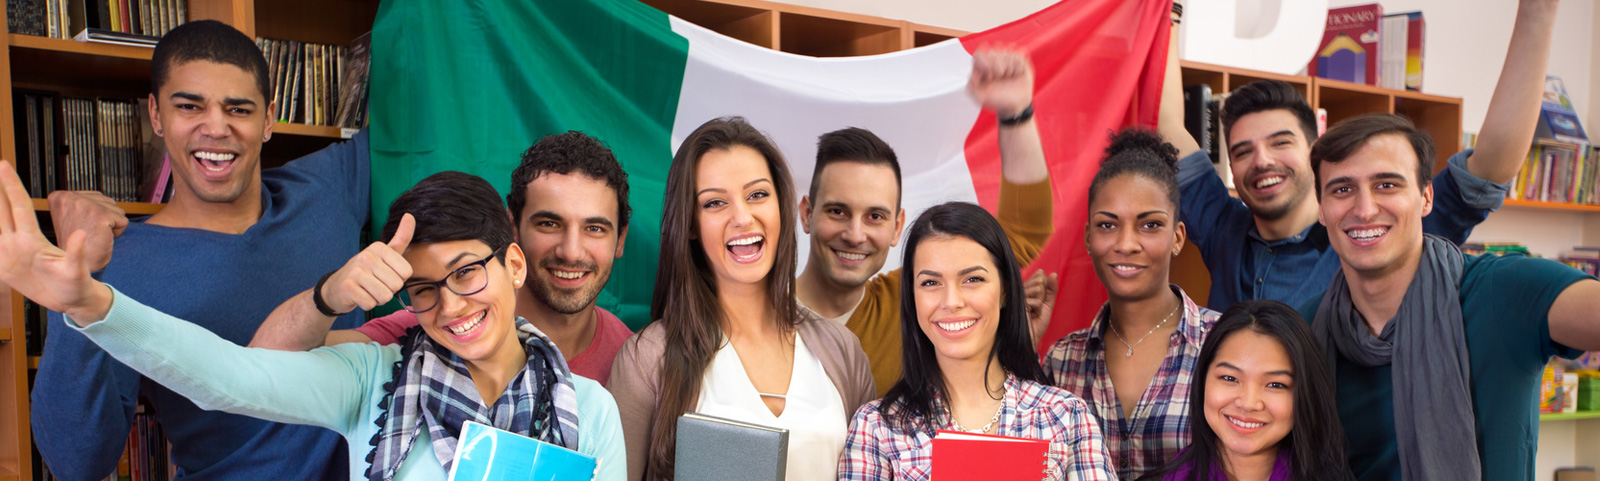 cursos idiomas cultura italiana